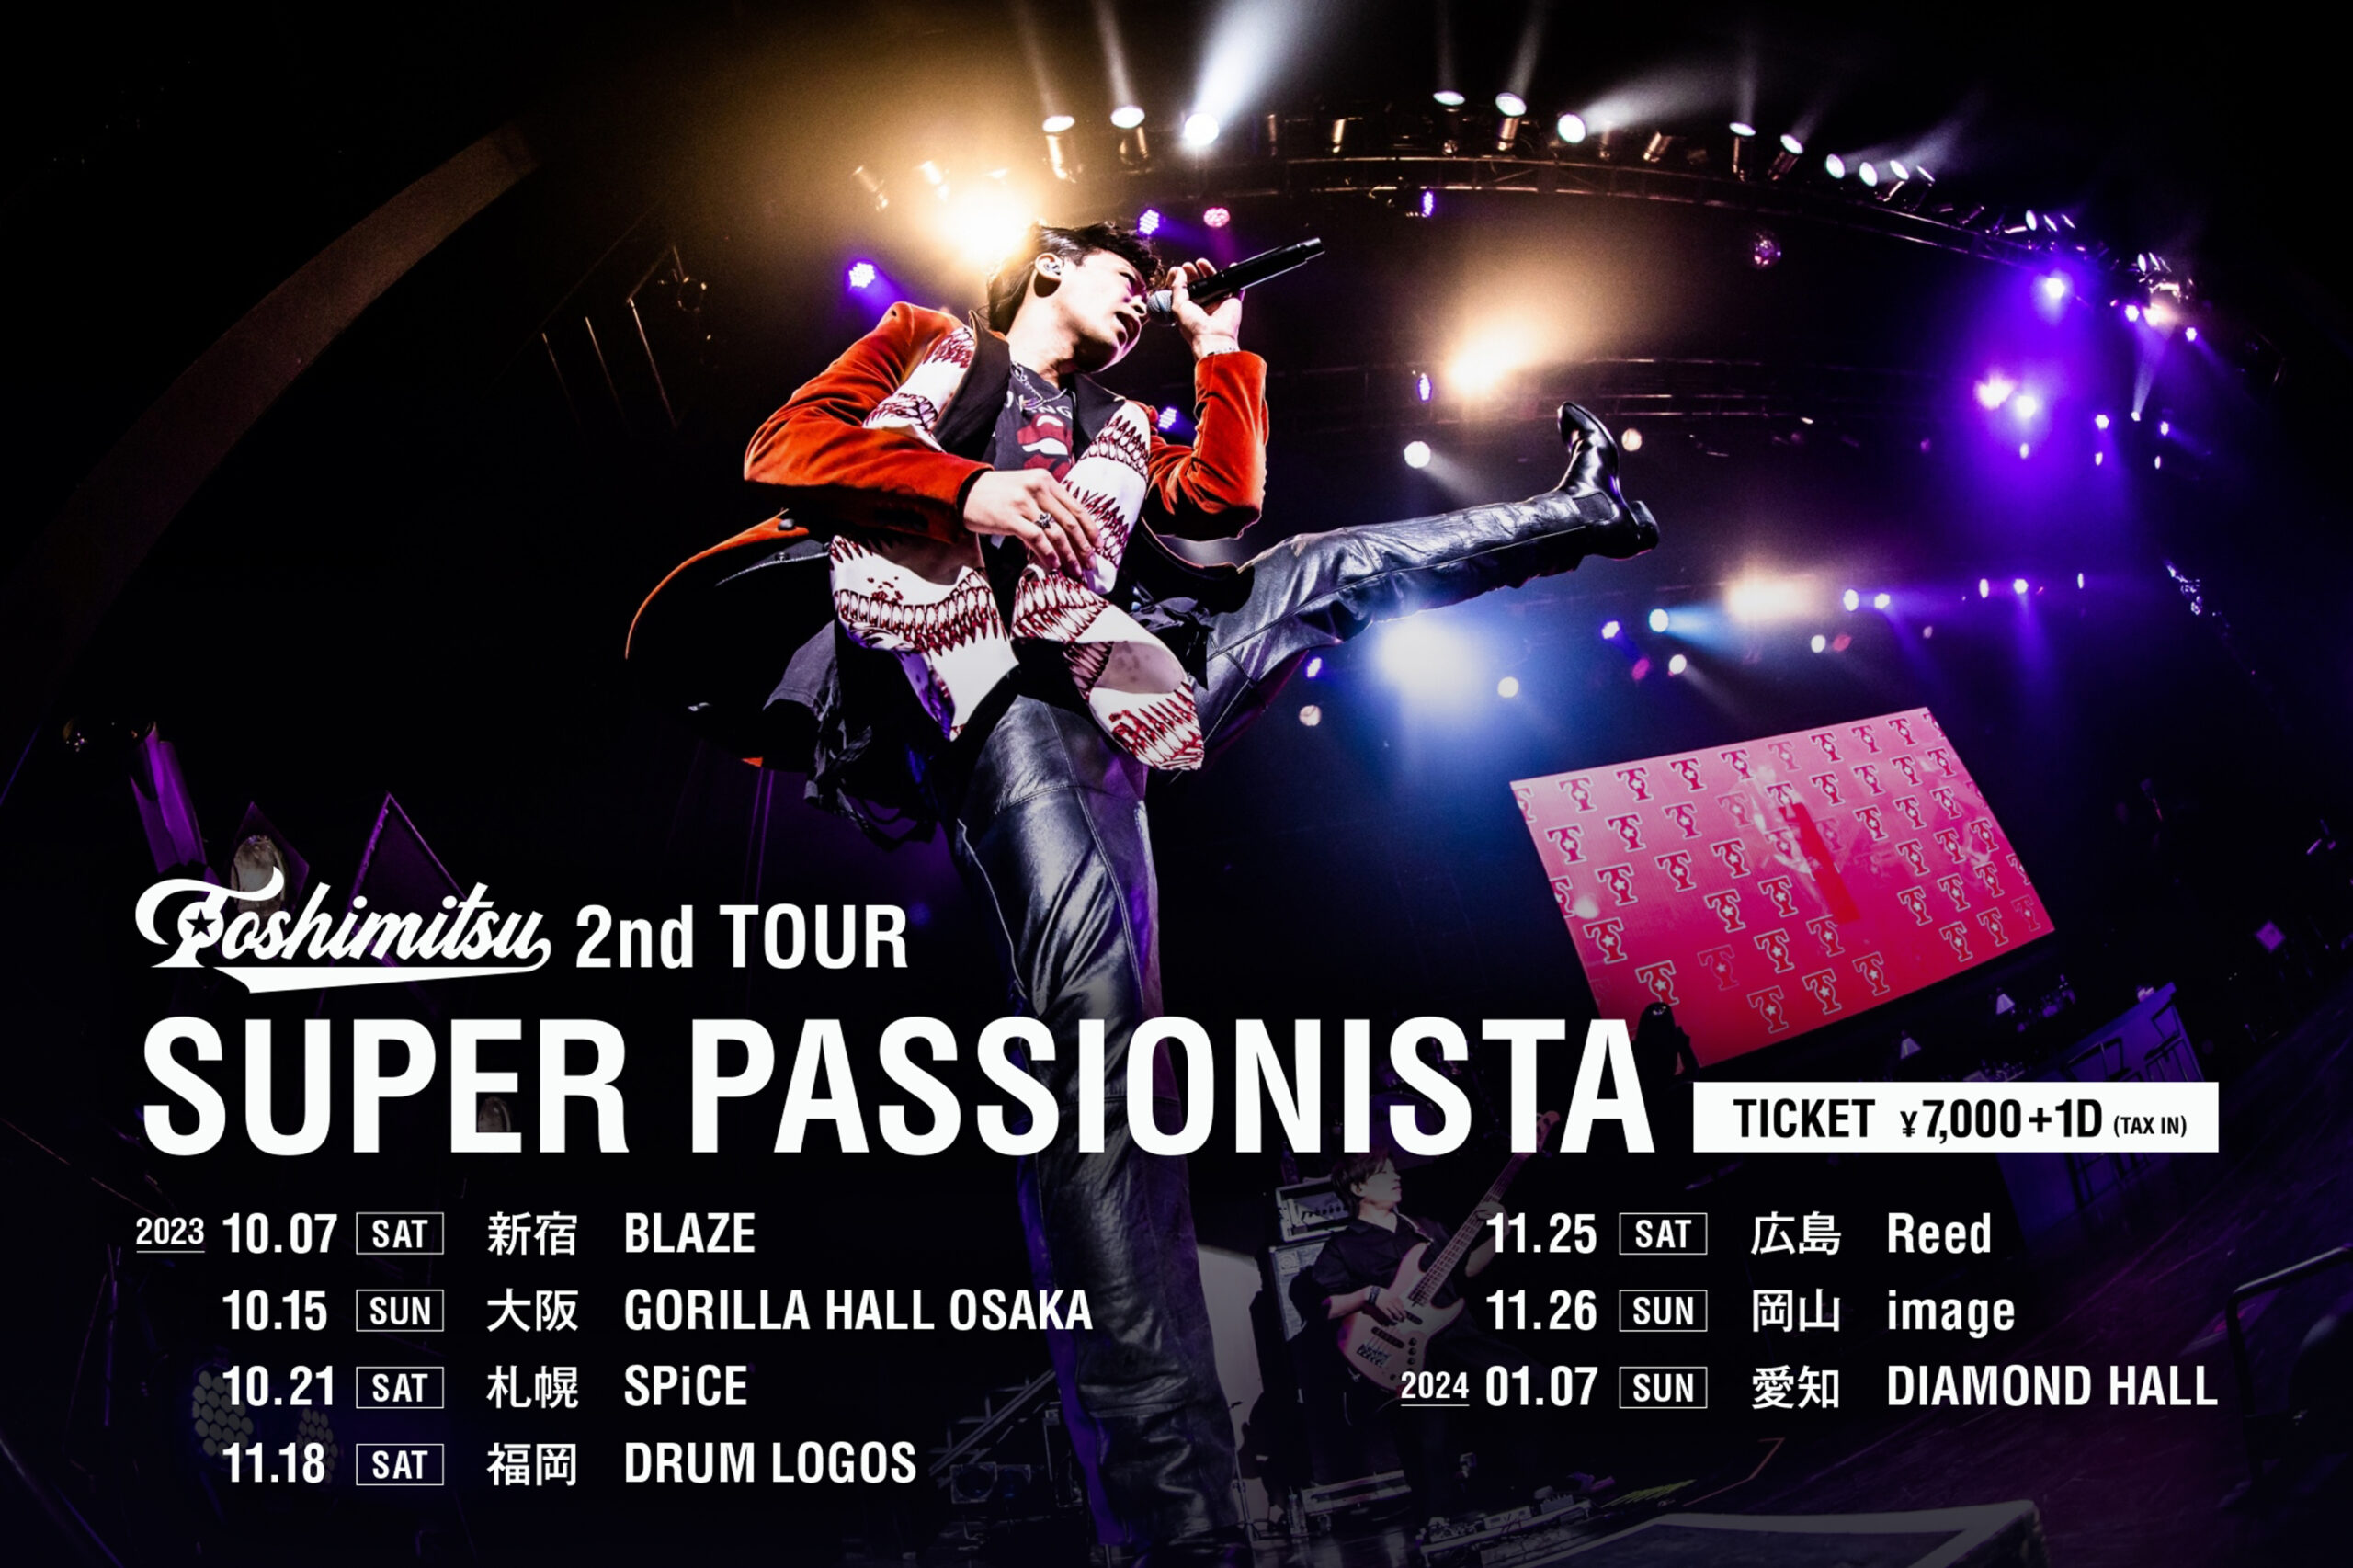 TOSHIMITSU 2nd TOUR 「SUPER PASSIONISTA」